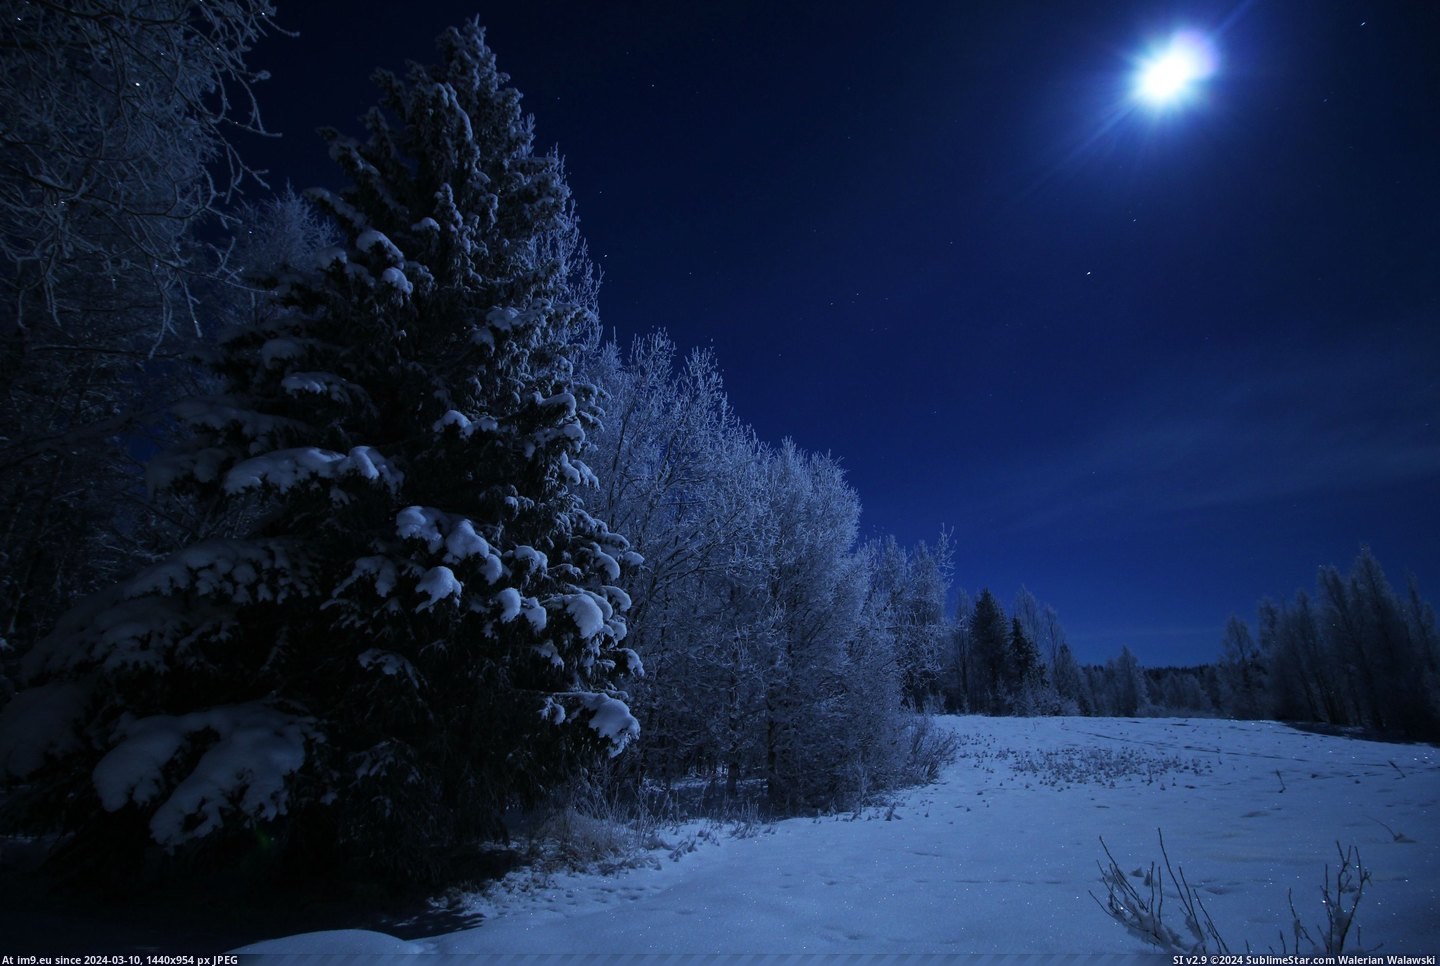 #Northern #Backyard #Degrees #Sweden #Midnight [Pics] -24 degrees celcius, around midnight, northern sweden. View from my backyard. Pic. (Obraz z album My r/PICS favs))